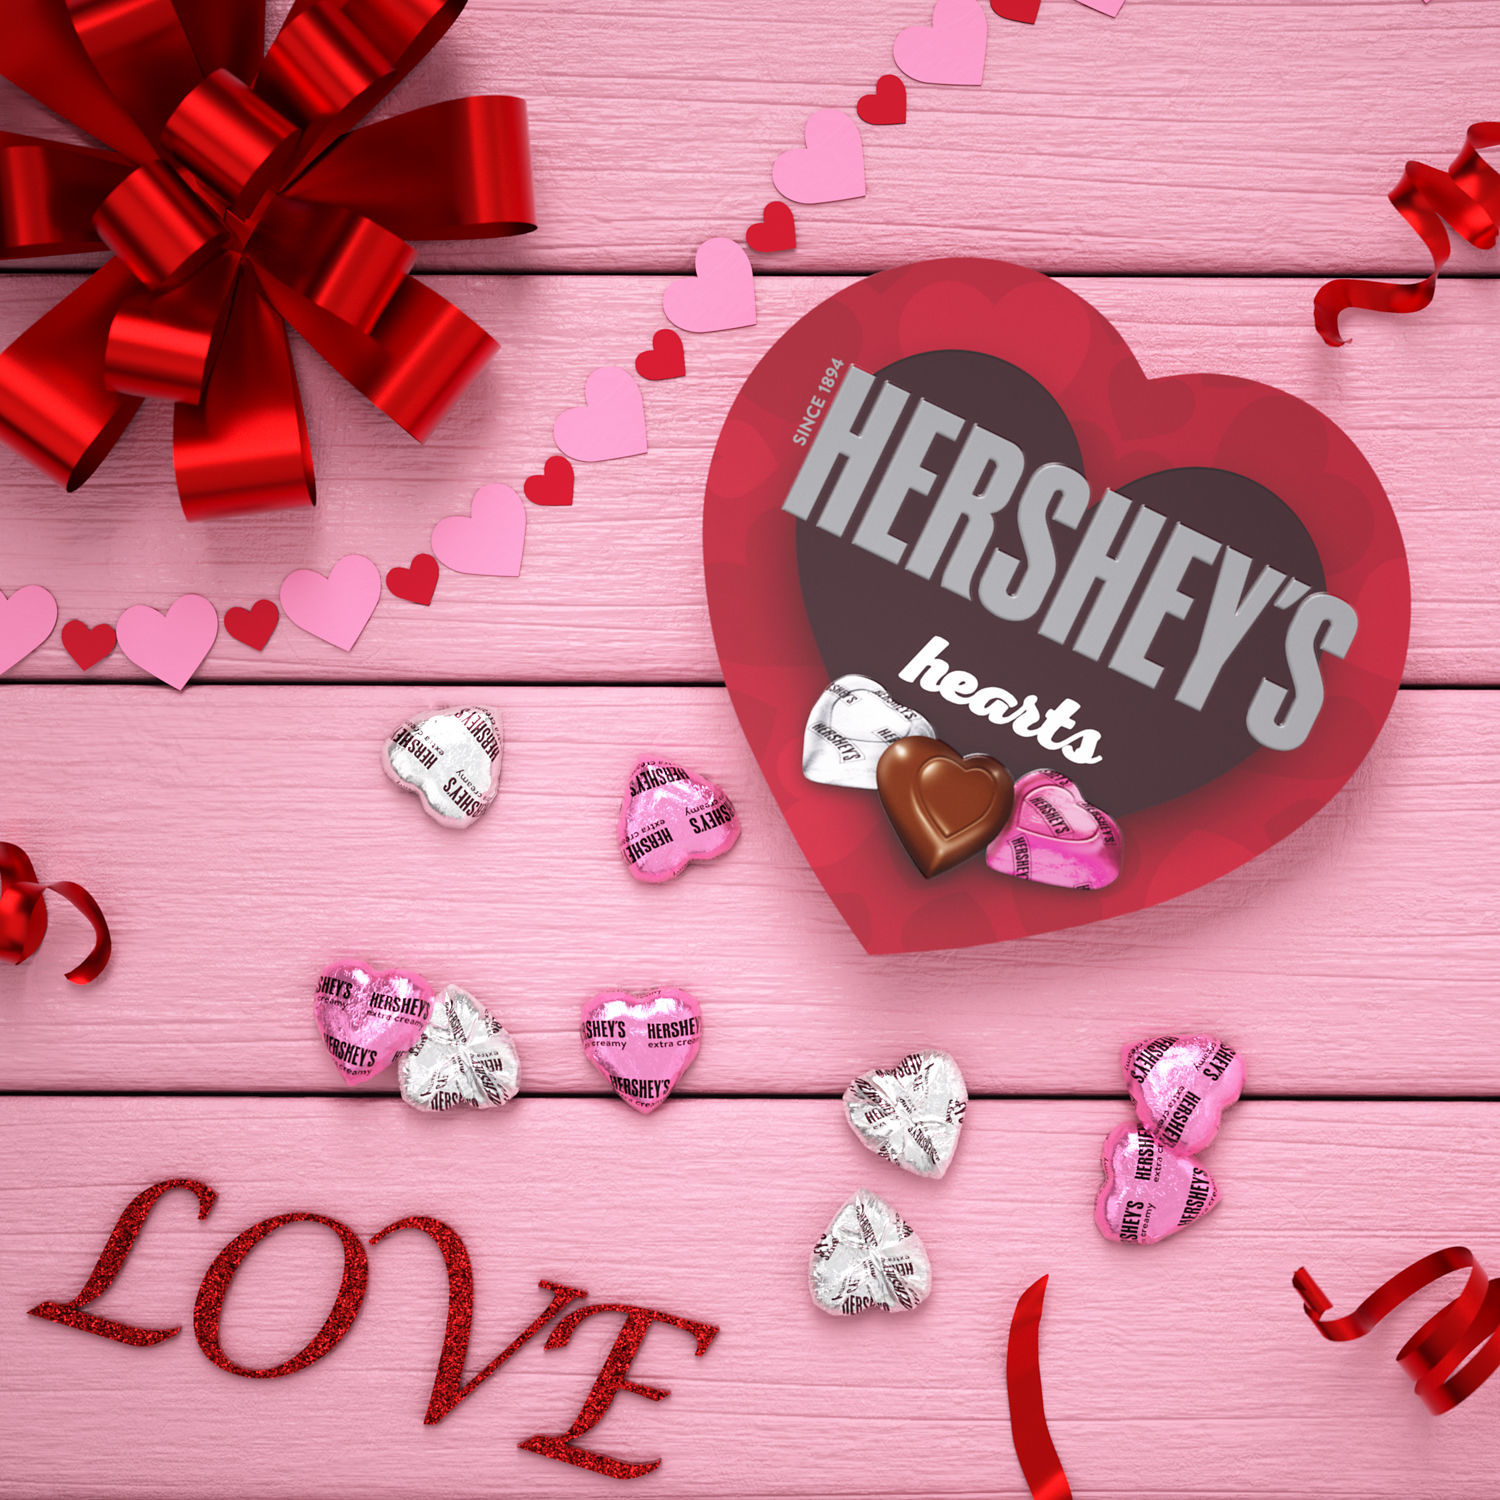 Hershey's Milk Chocolate Hearts Valentine's Day Candy, Gift Box 6.4 oz - image 5 of 6